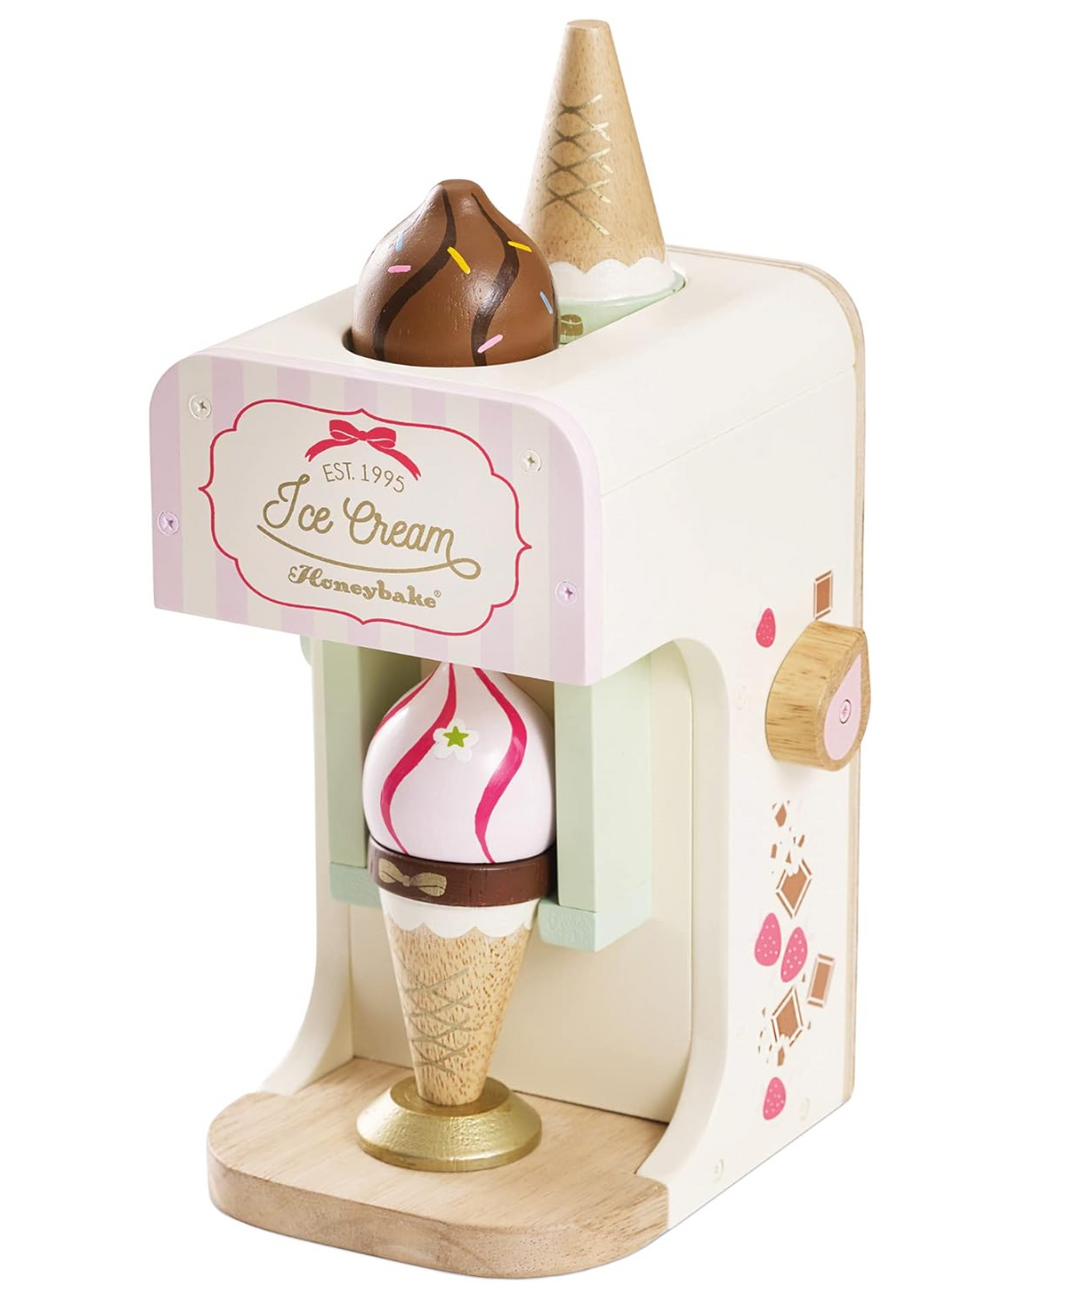 Genuine Icee Ice Cream Machine - Soft Serve Maker With 4 Cups